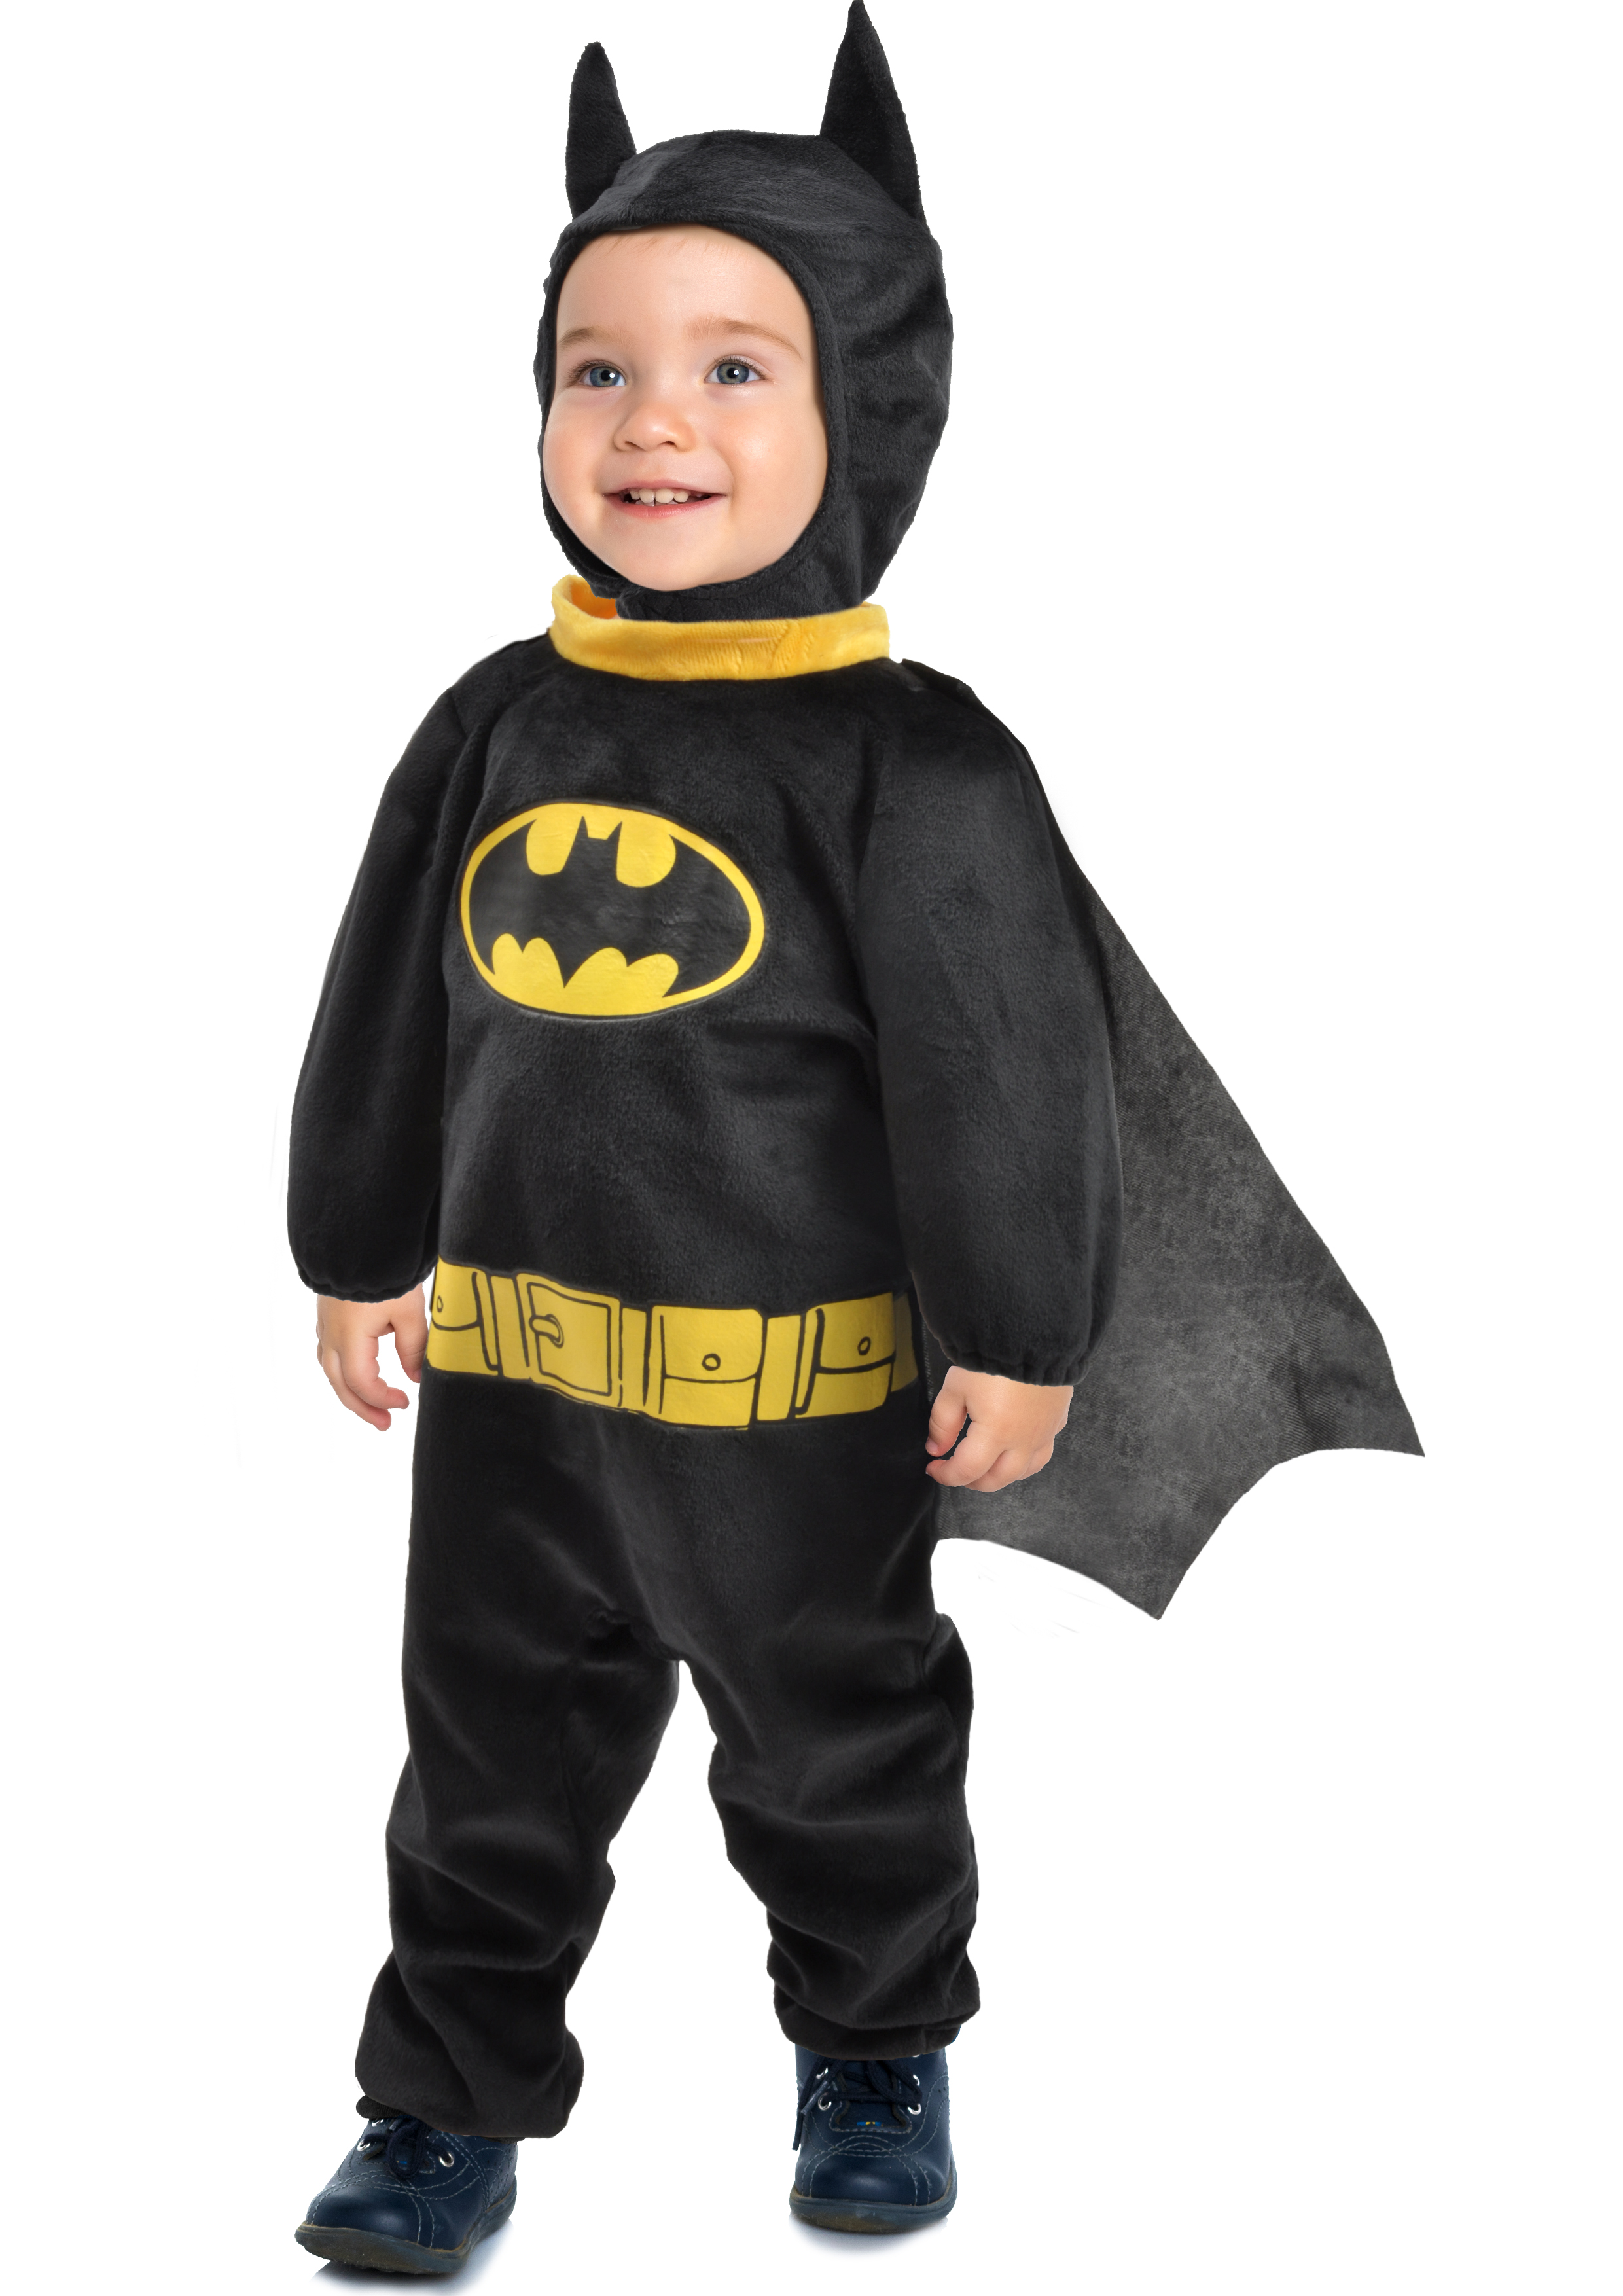 Ciao - Baby Costume - Batman (70 cm) (11724.1-2)